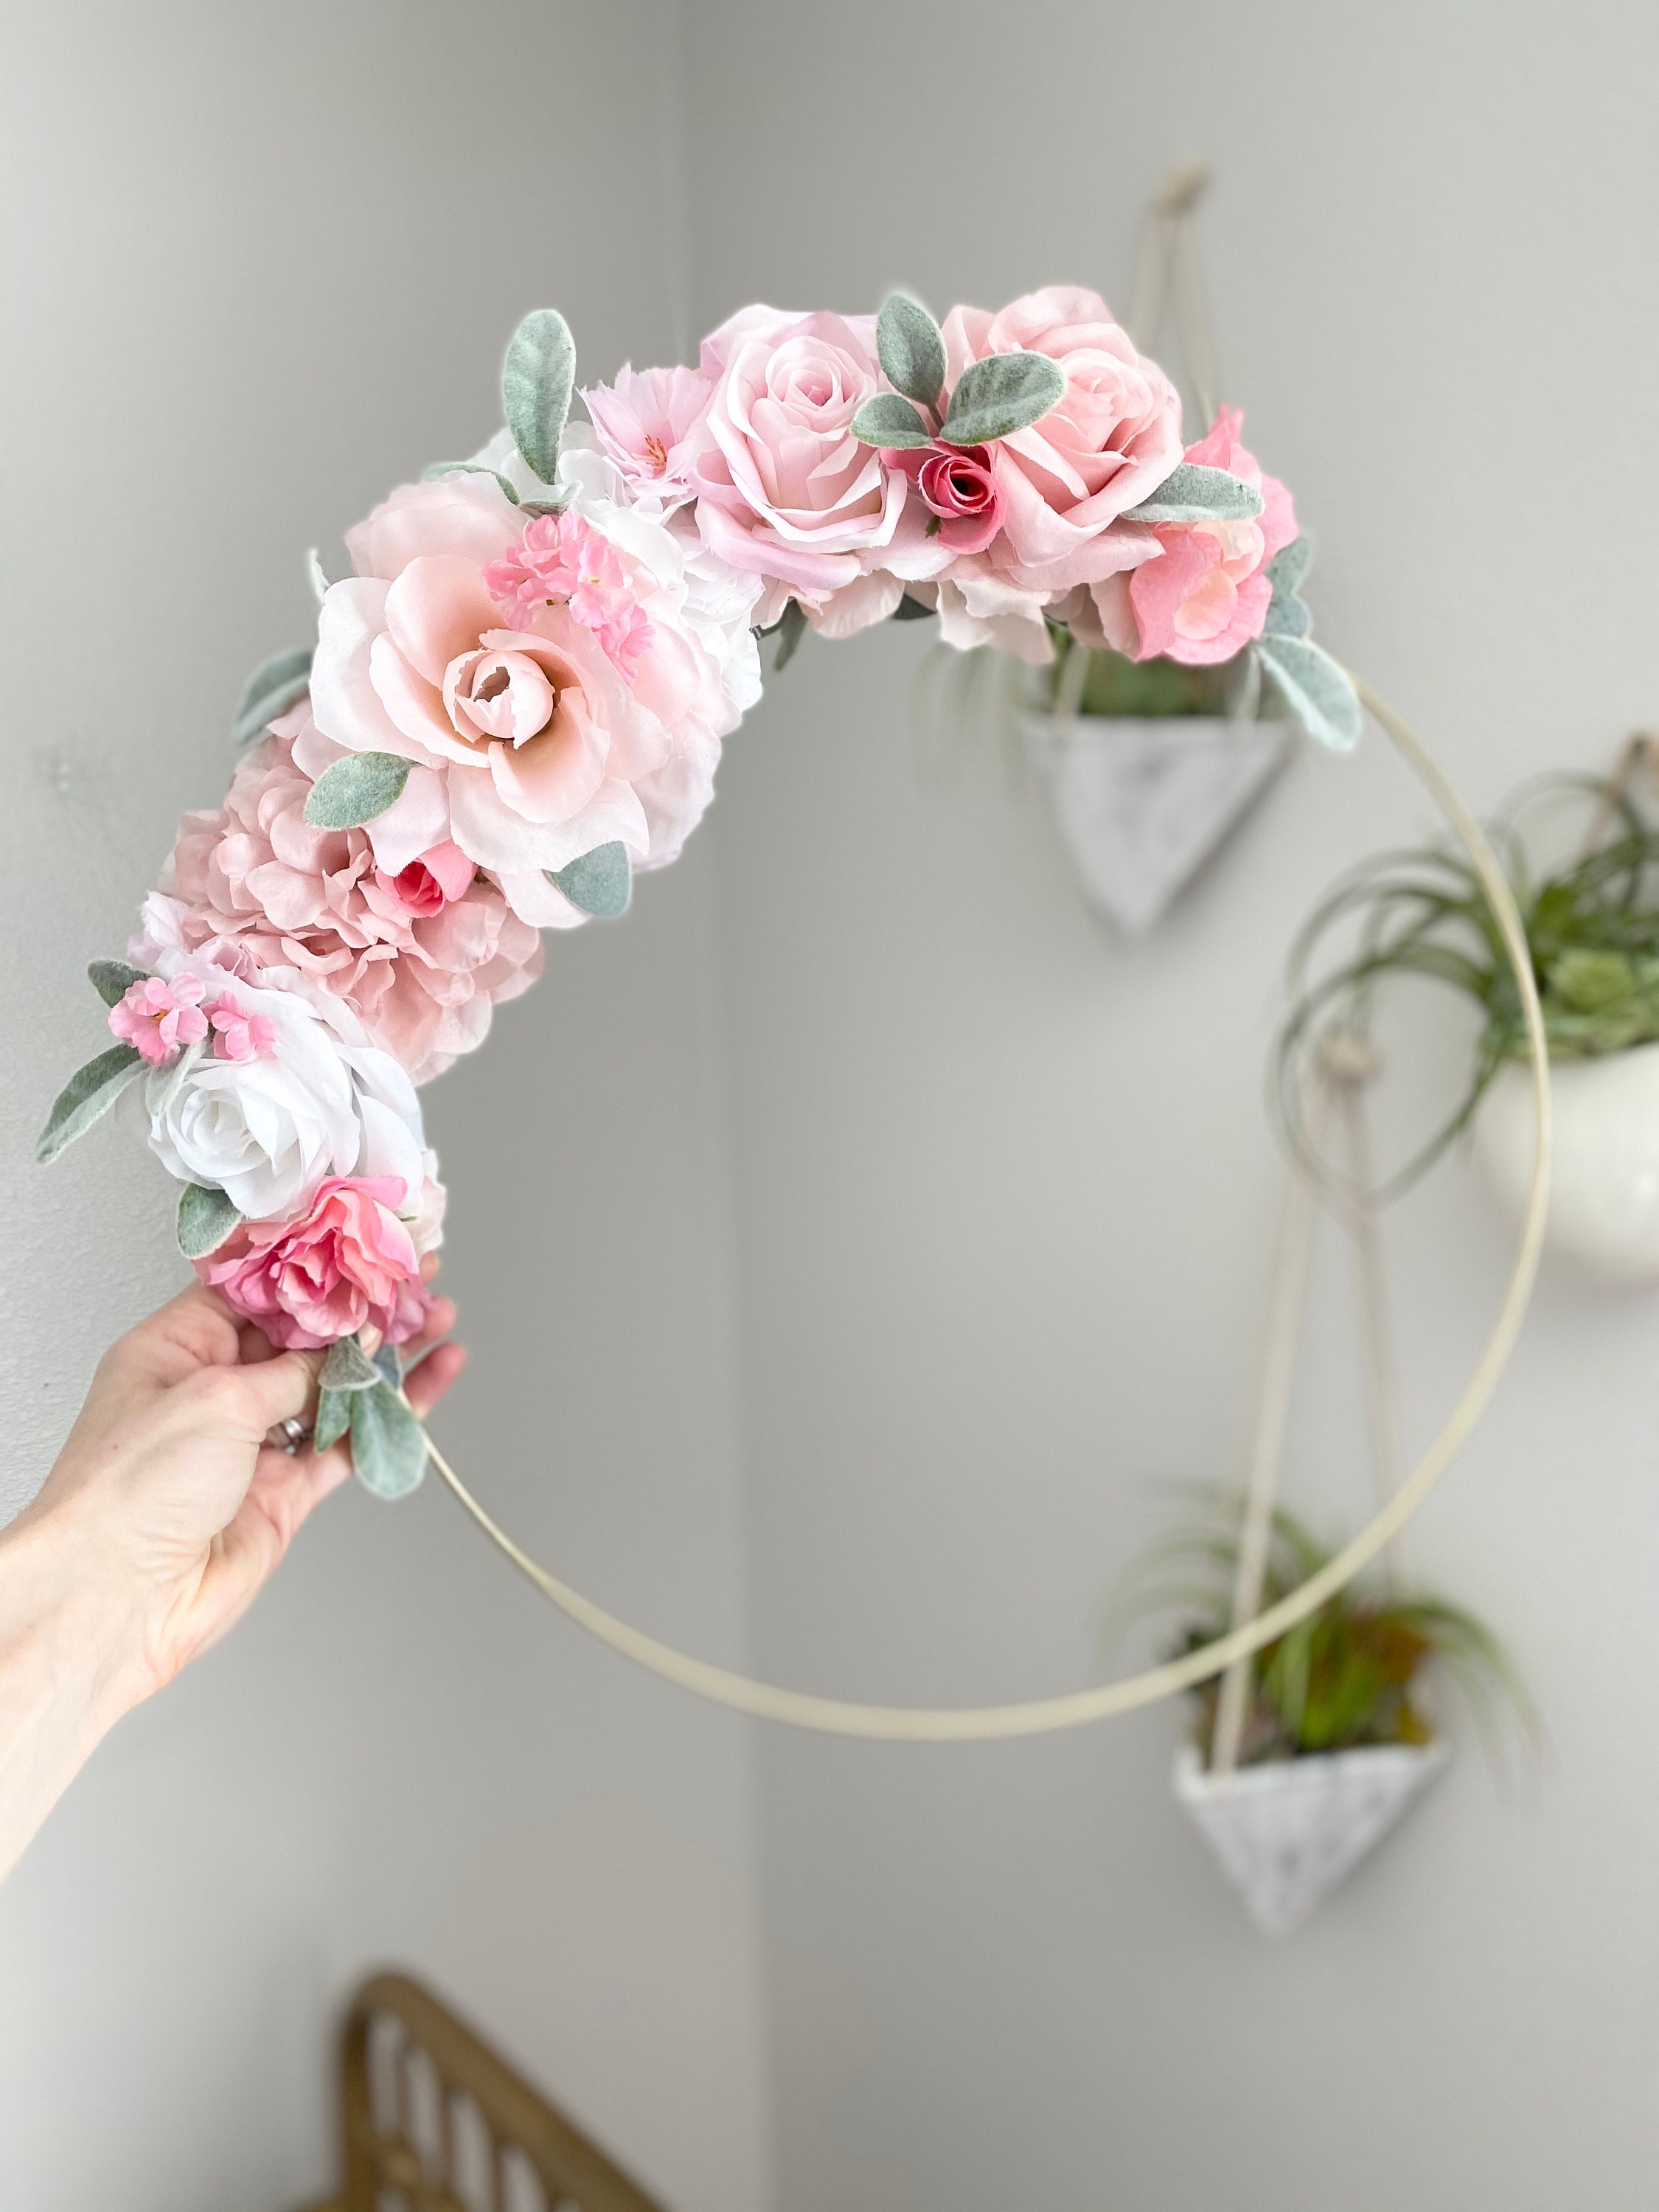 Floral Toddler Girl Room Decor Gift Playroom Wall Hoop Wreath Art Guest Boho